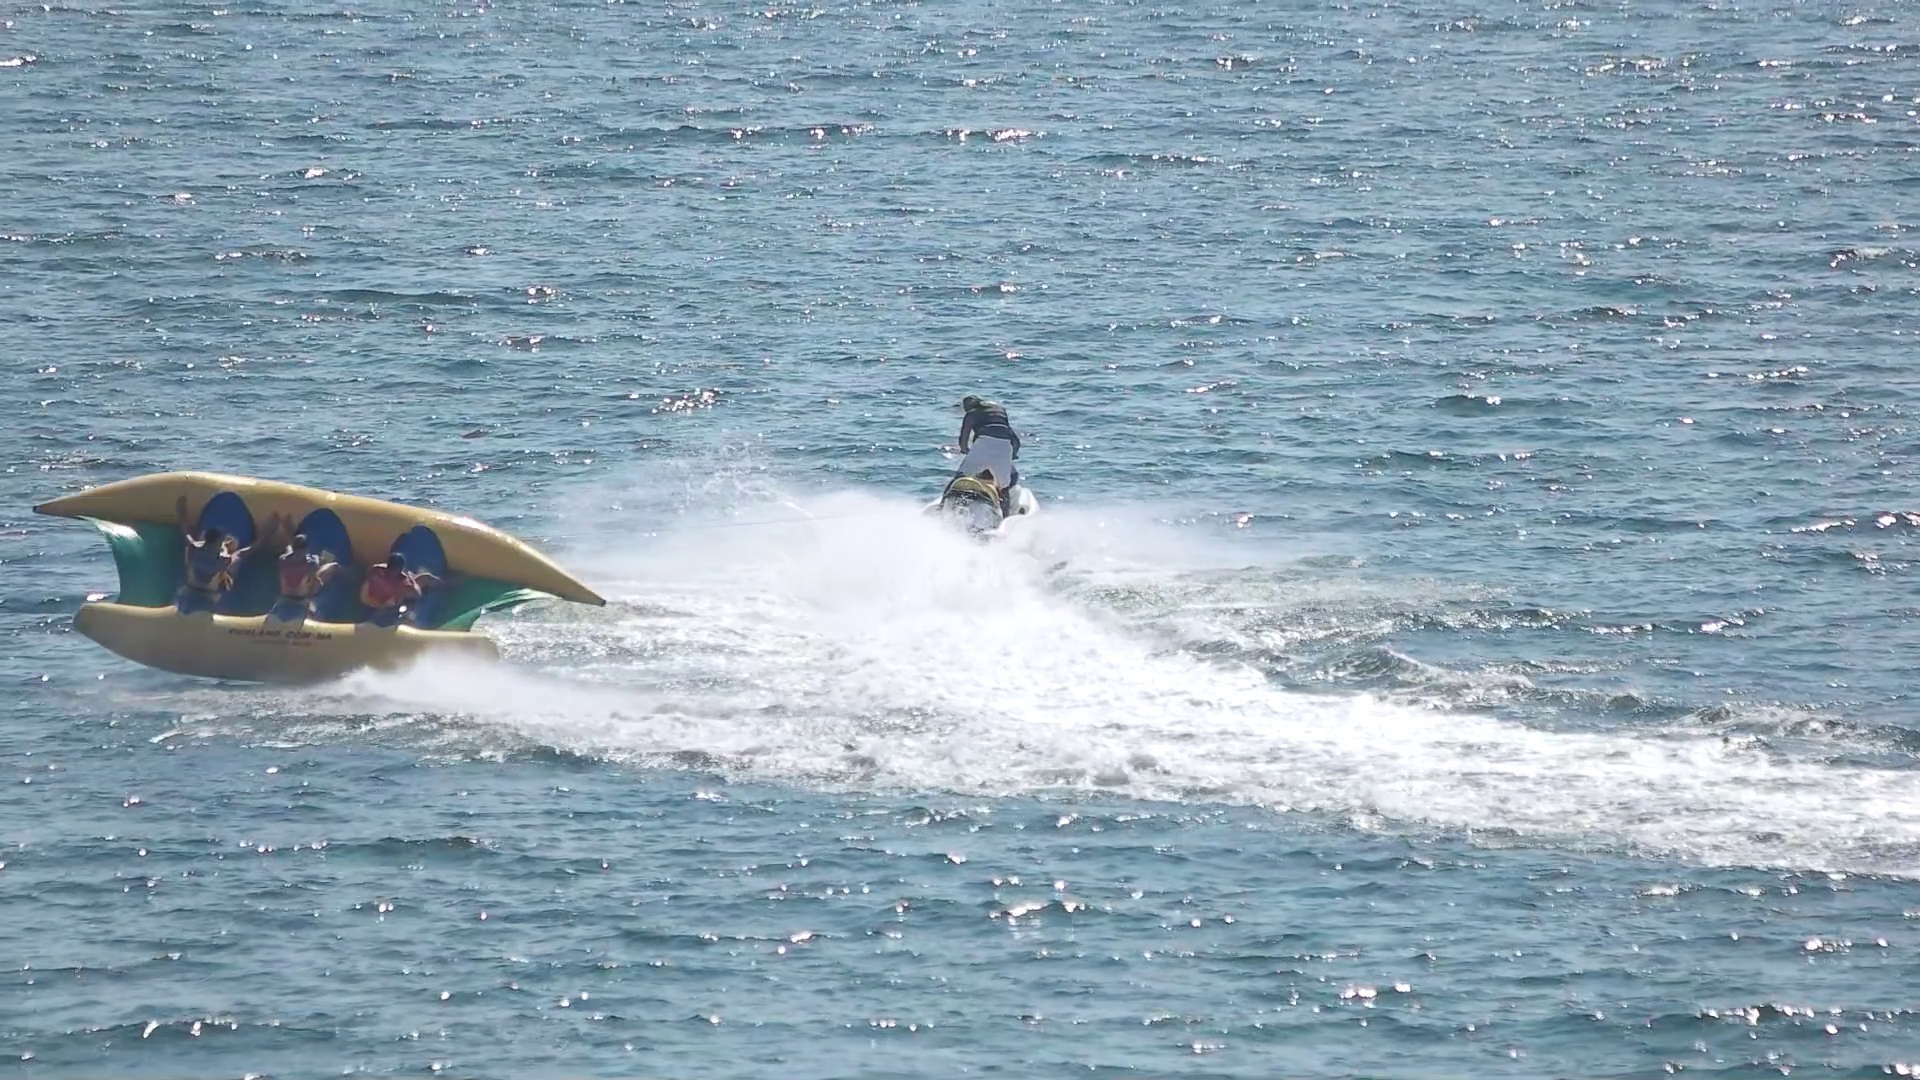 Flying banana boat ride. Jet ski in slow motion. Stock Video Footage ...